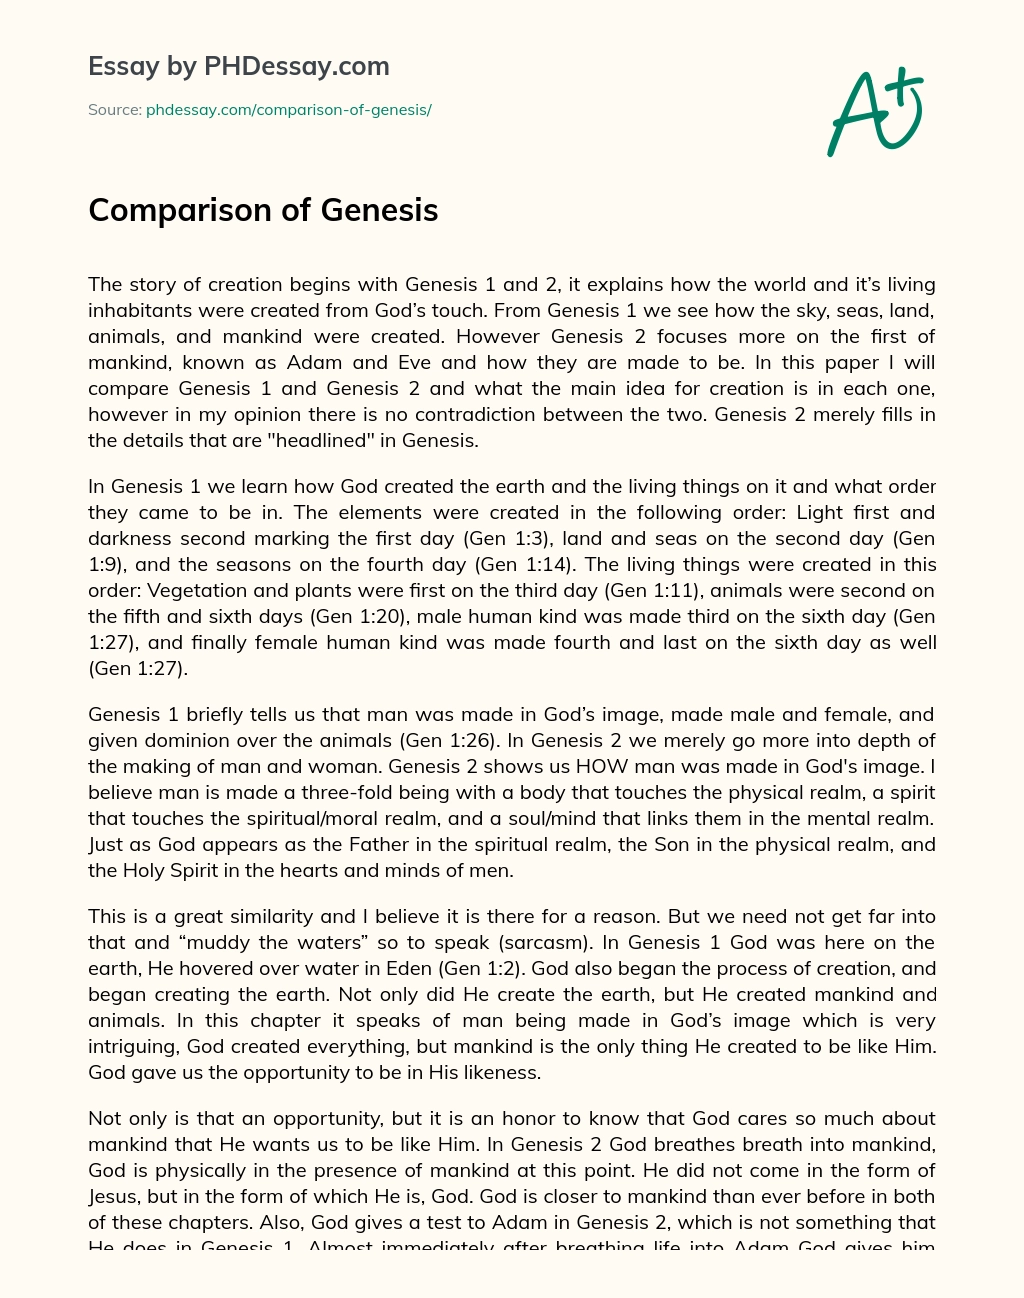 Comparison of Genesis essay